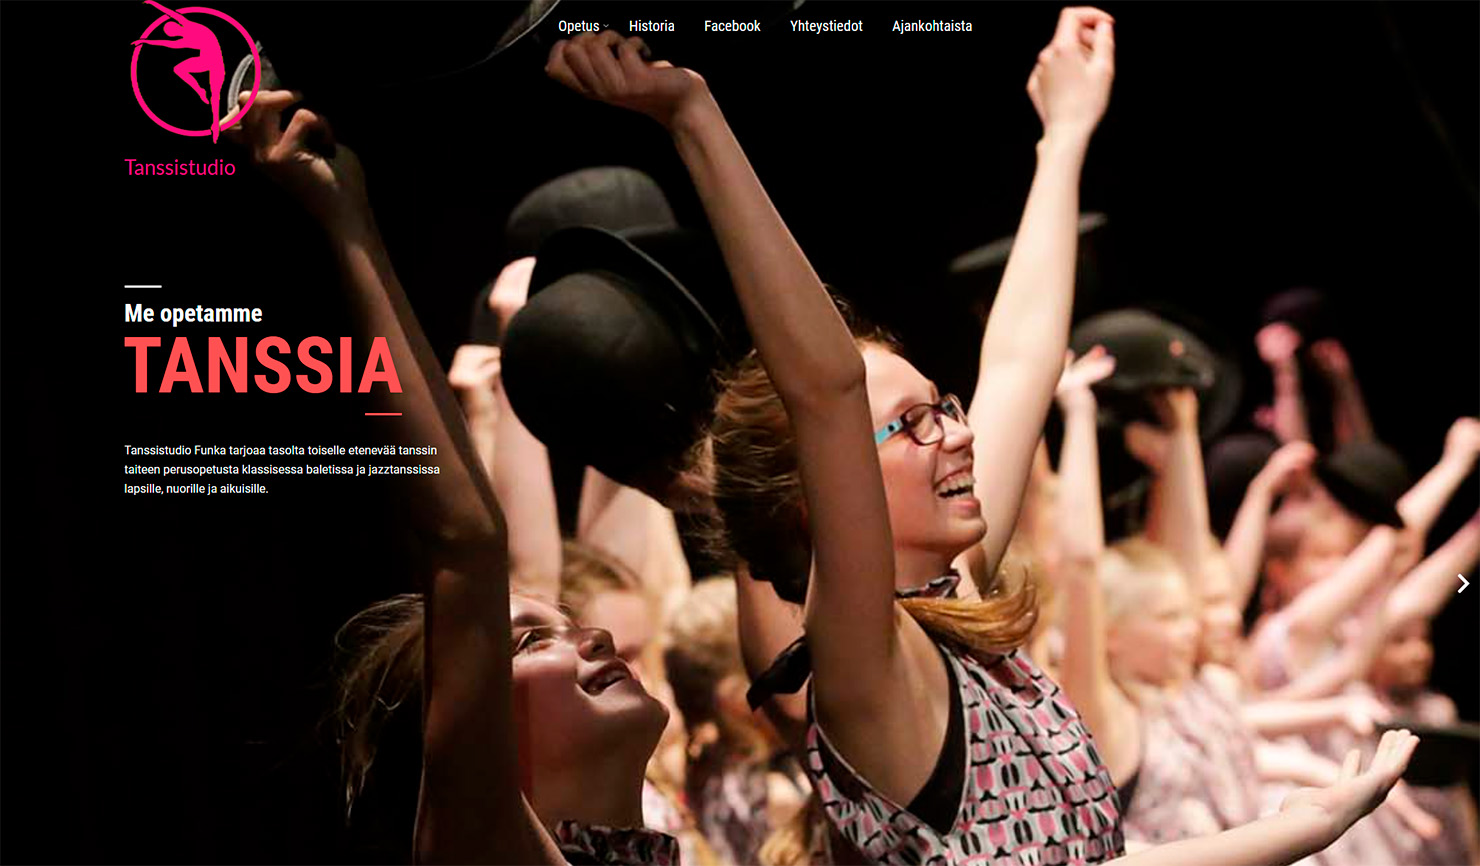 Website and domain: funka.fi